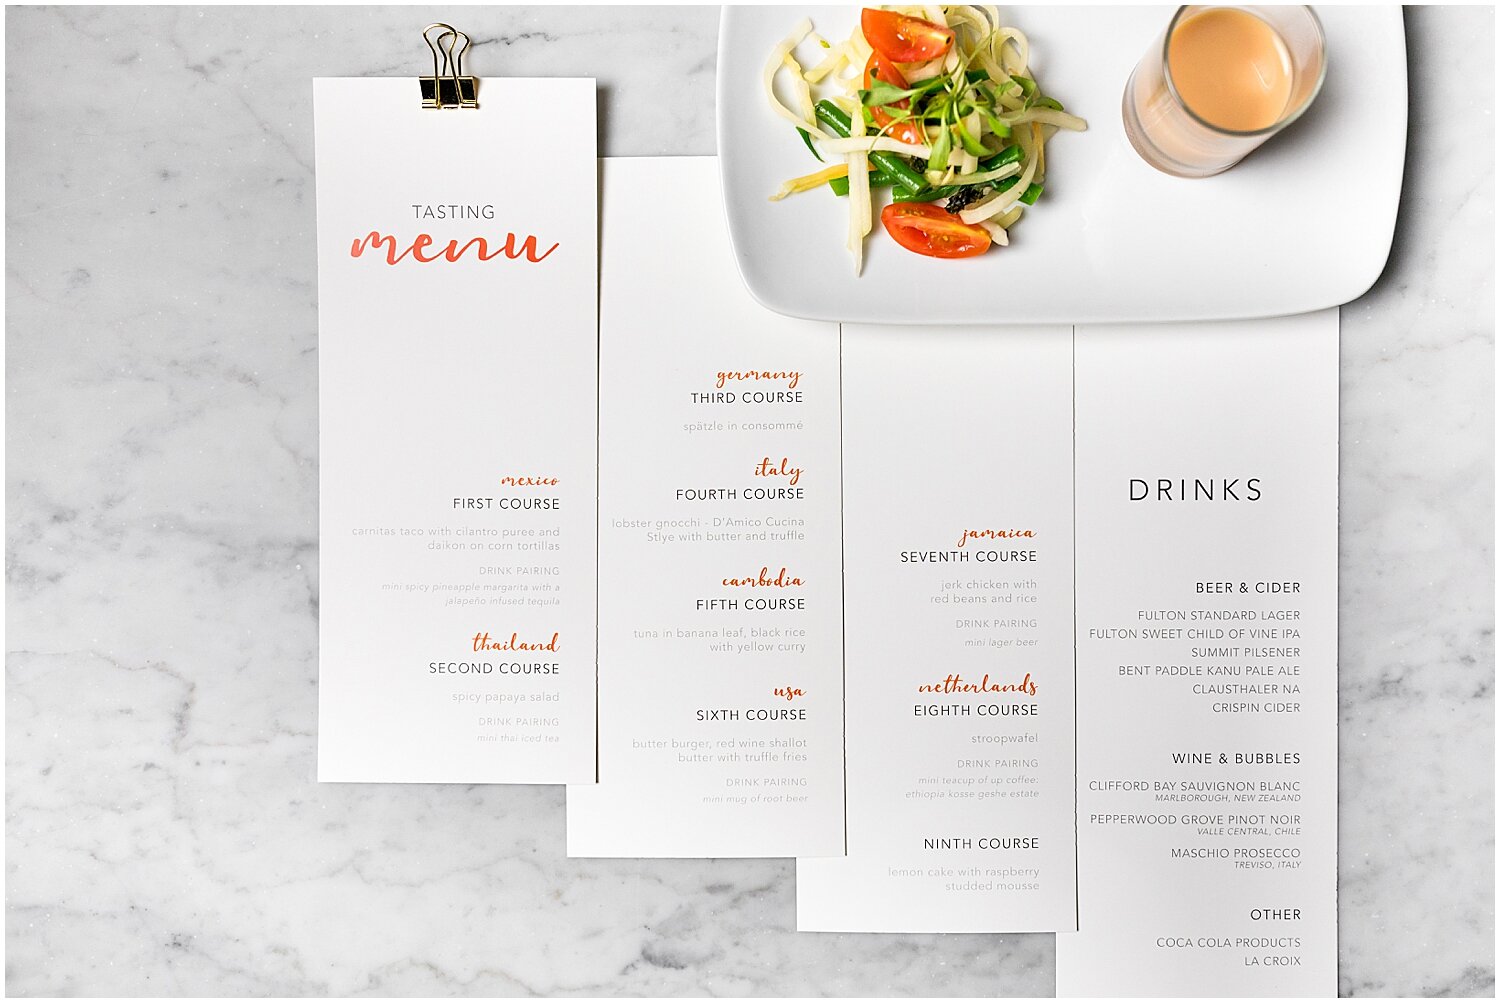  9 course tasting menu for mpls wedding 